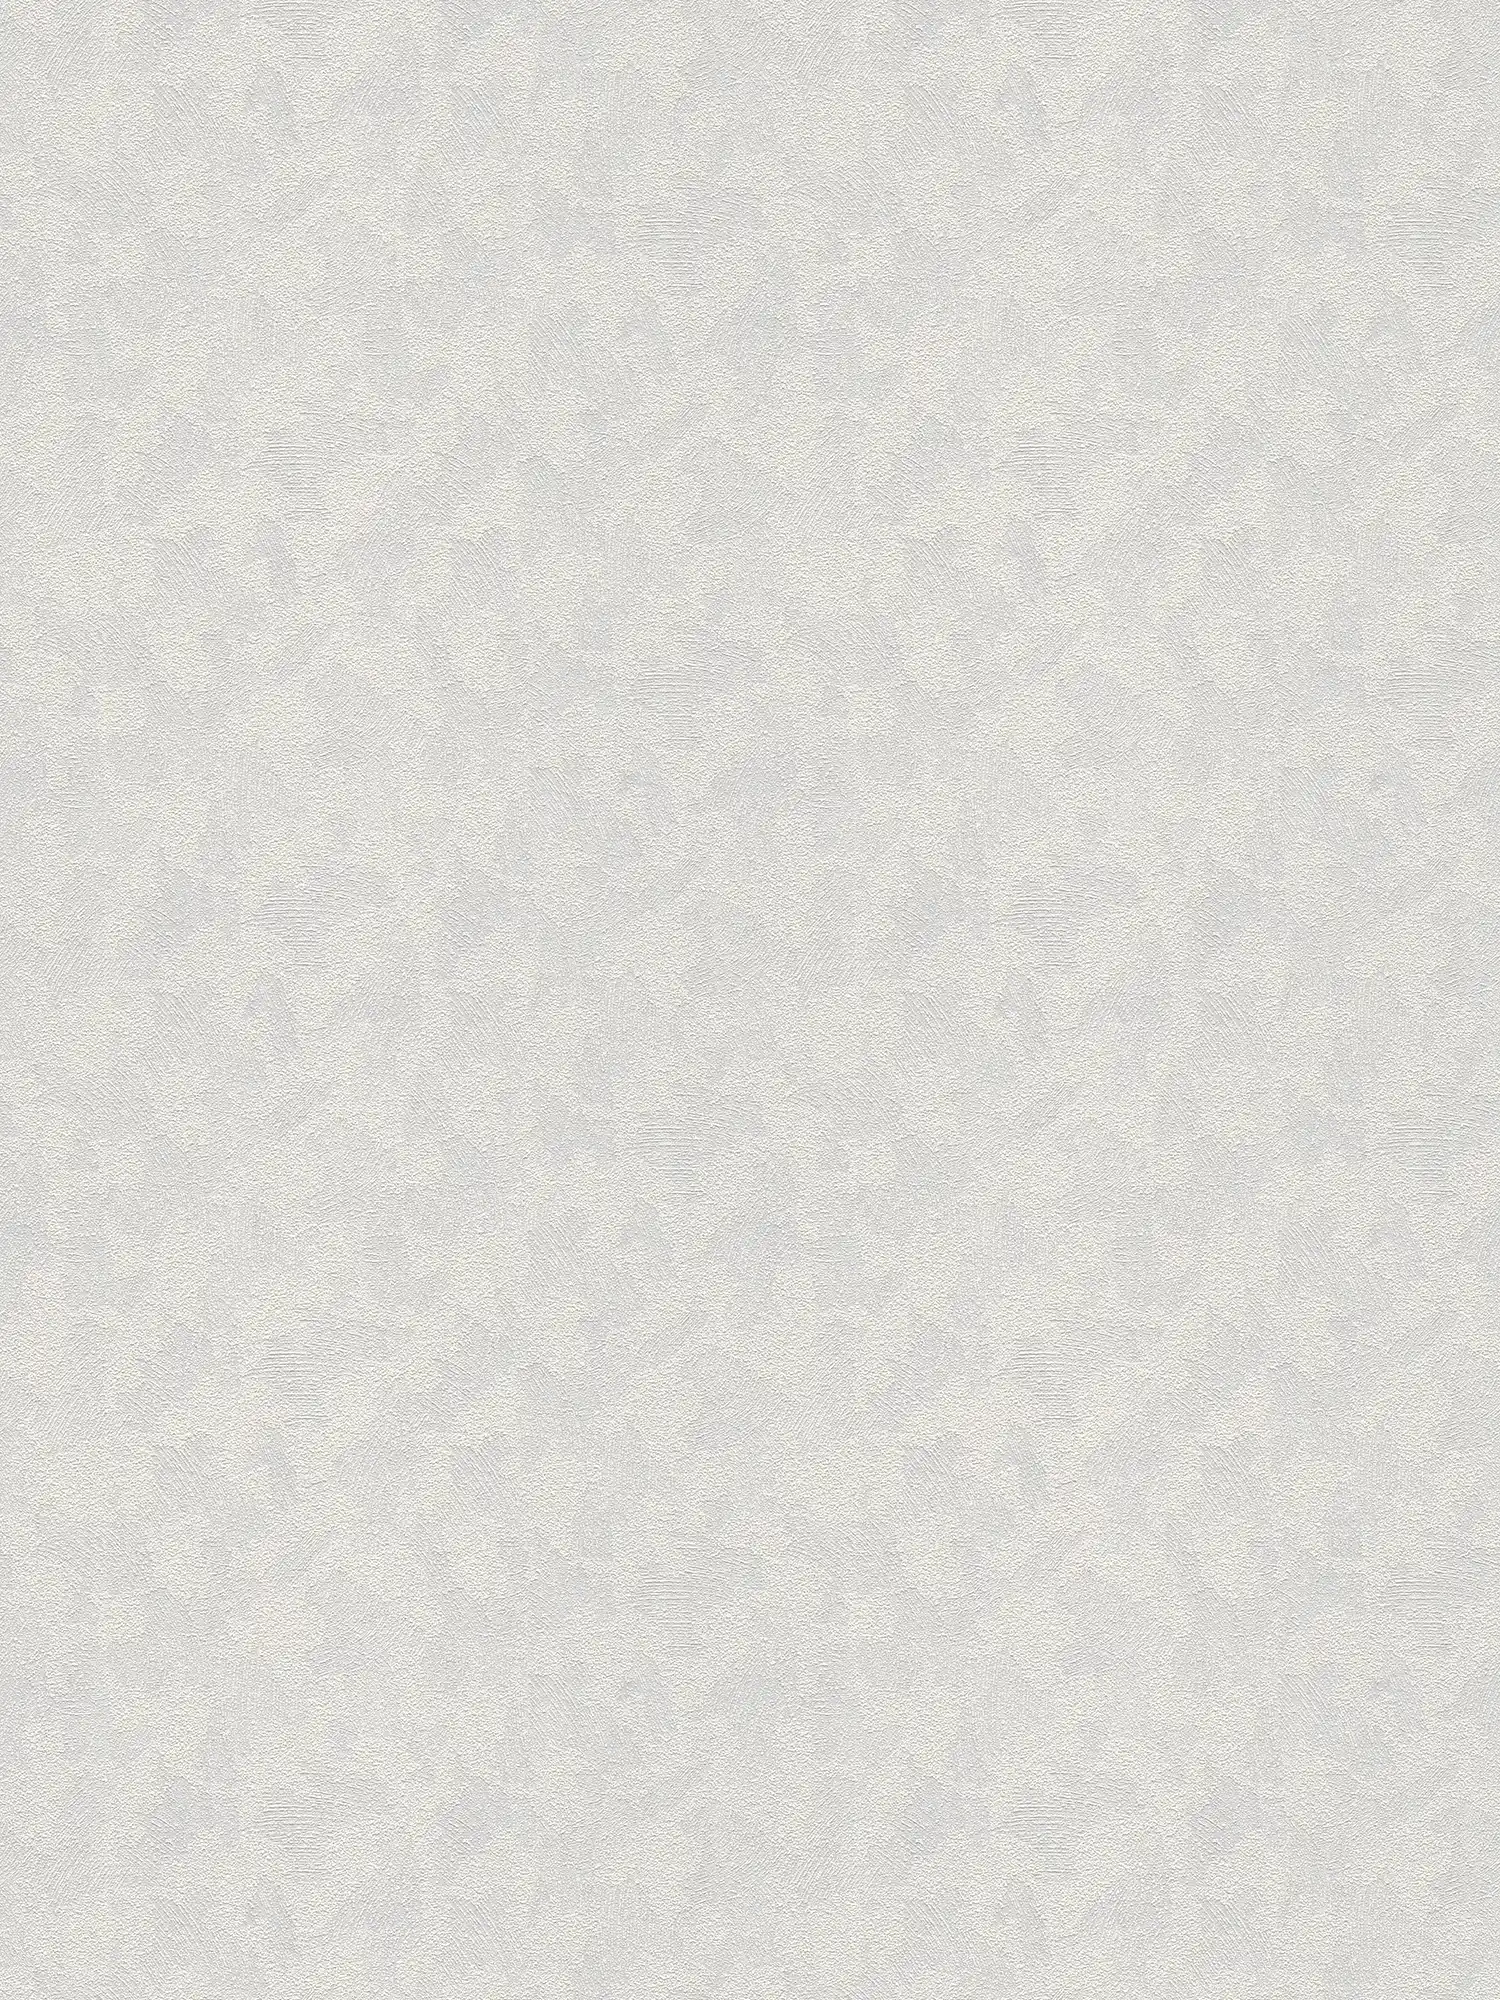 Papel pintado texturizado con aspecto de yeso dimensional - blanco
